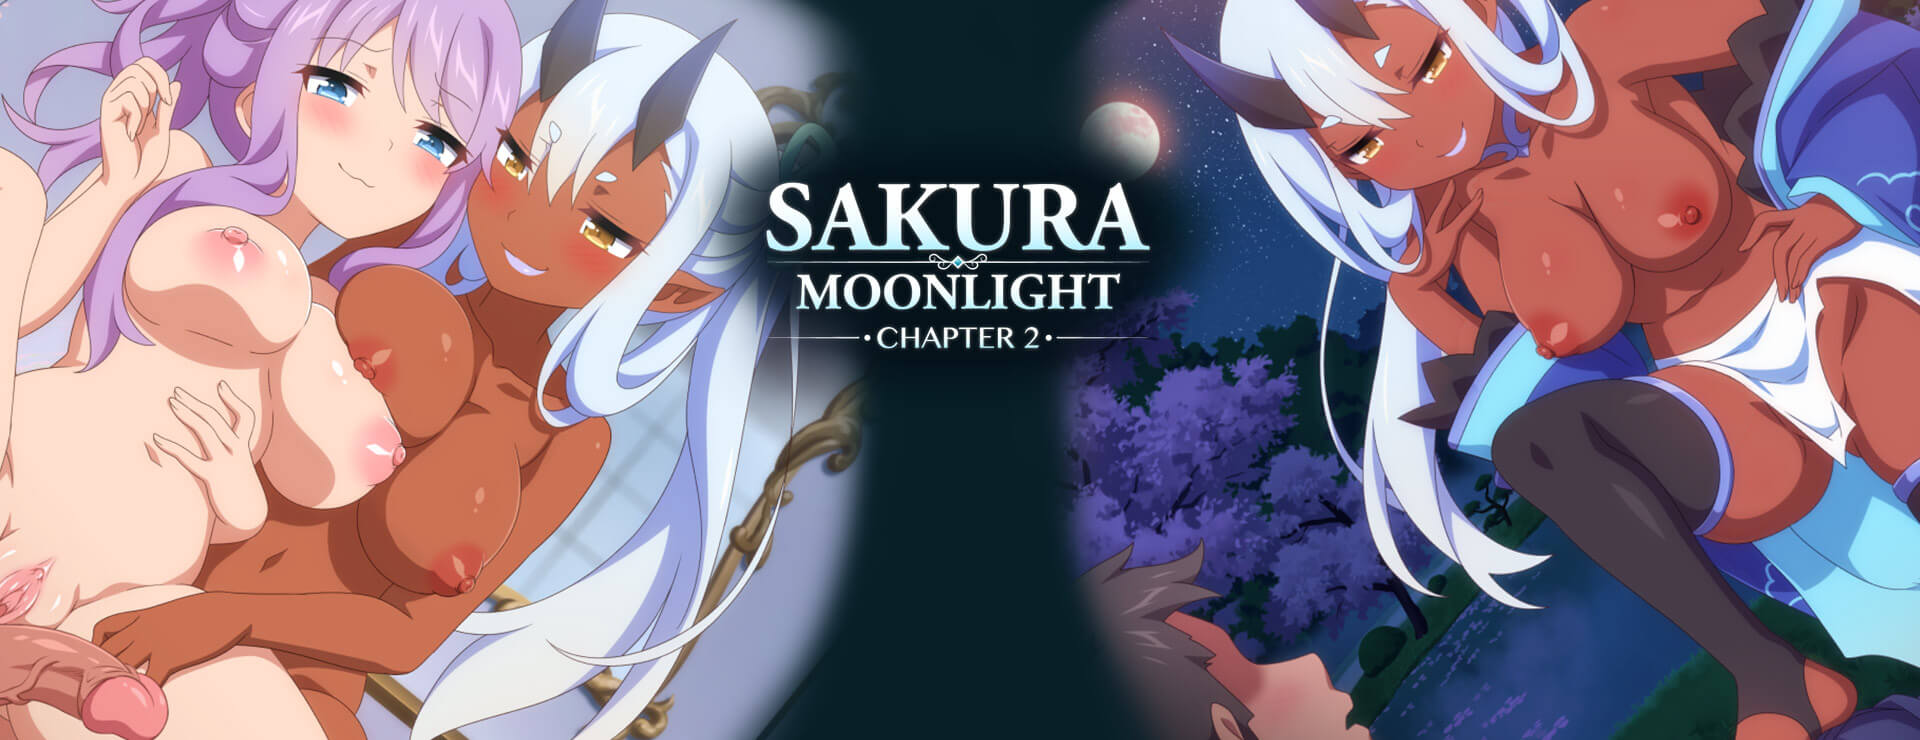 Sakura Moonlight Chapter 2 - Roman Visuel Jeu